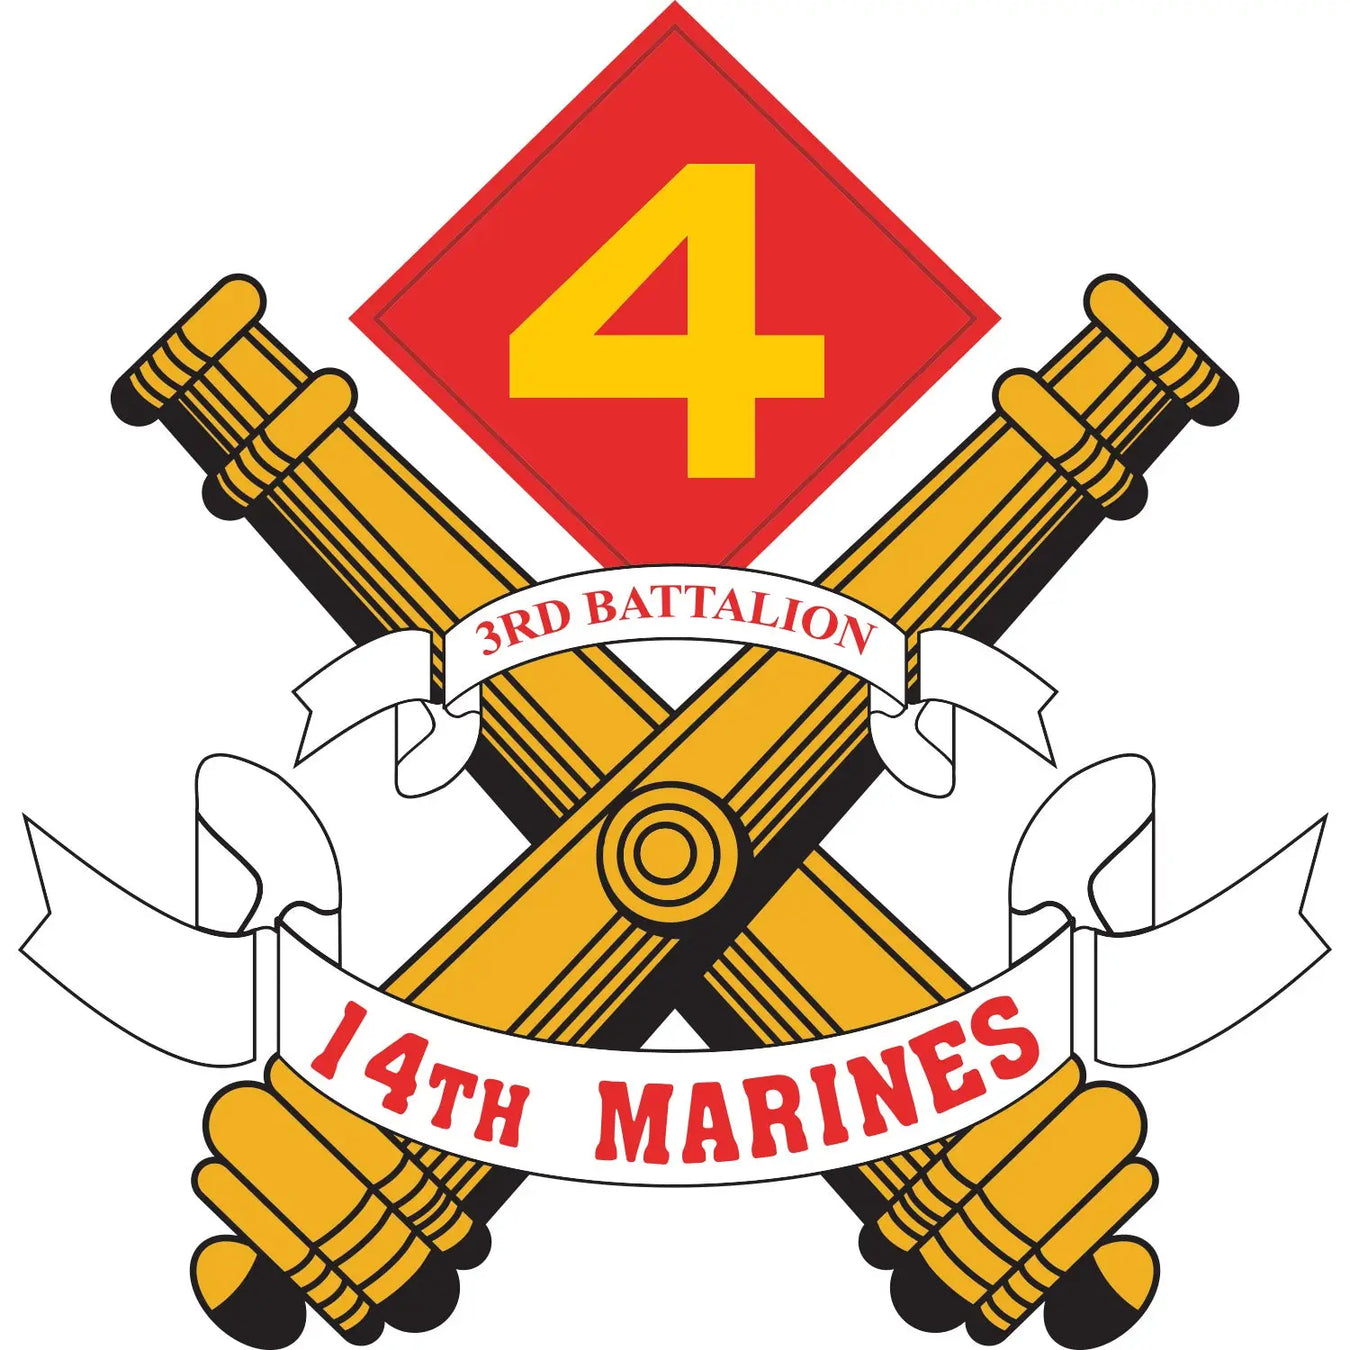 3rd Battalion, 14th Marines